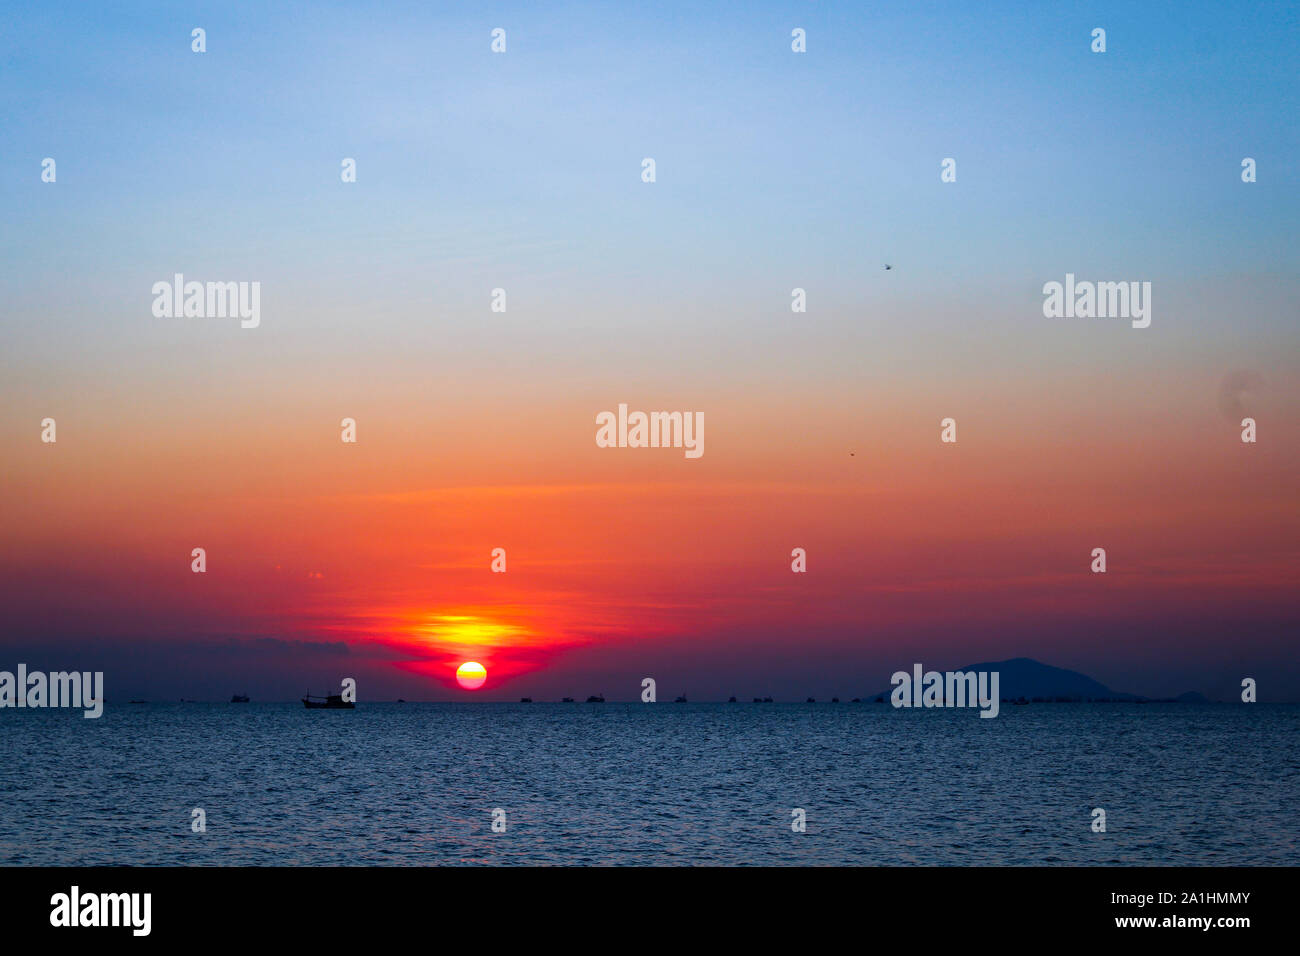 Turtle Island sun set time in Rach Gia, Kien Giang, Vietnam fotografiert. Stockfoto